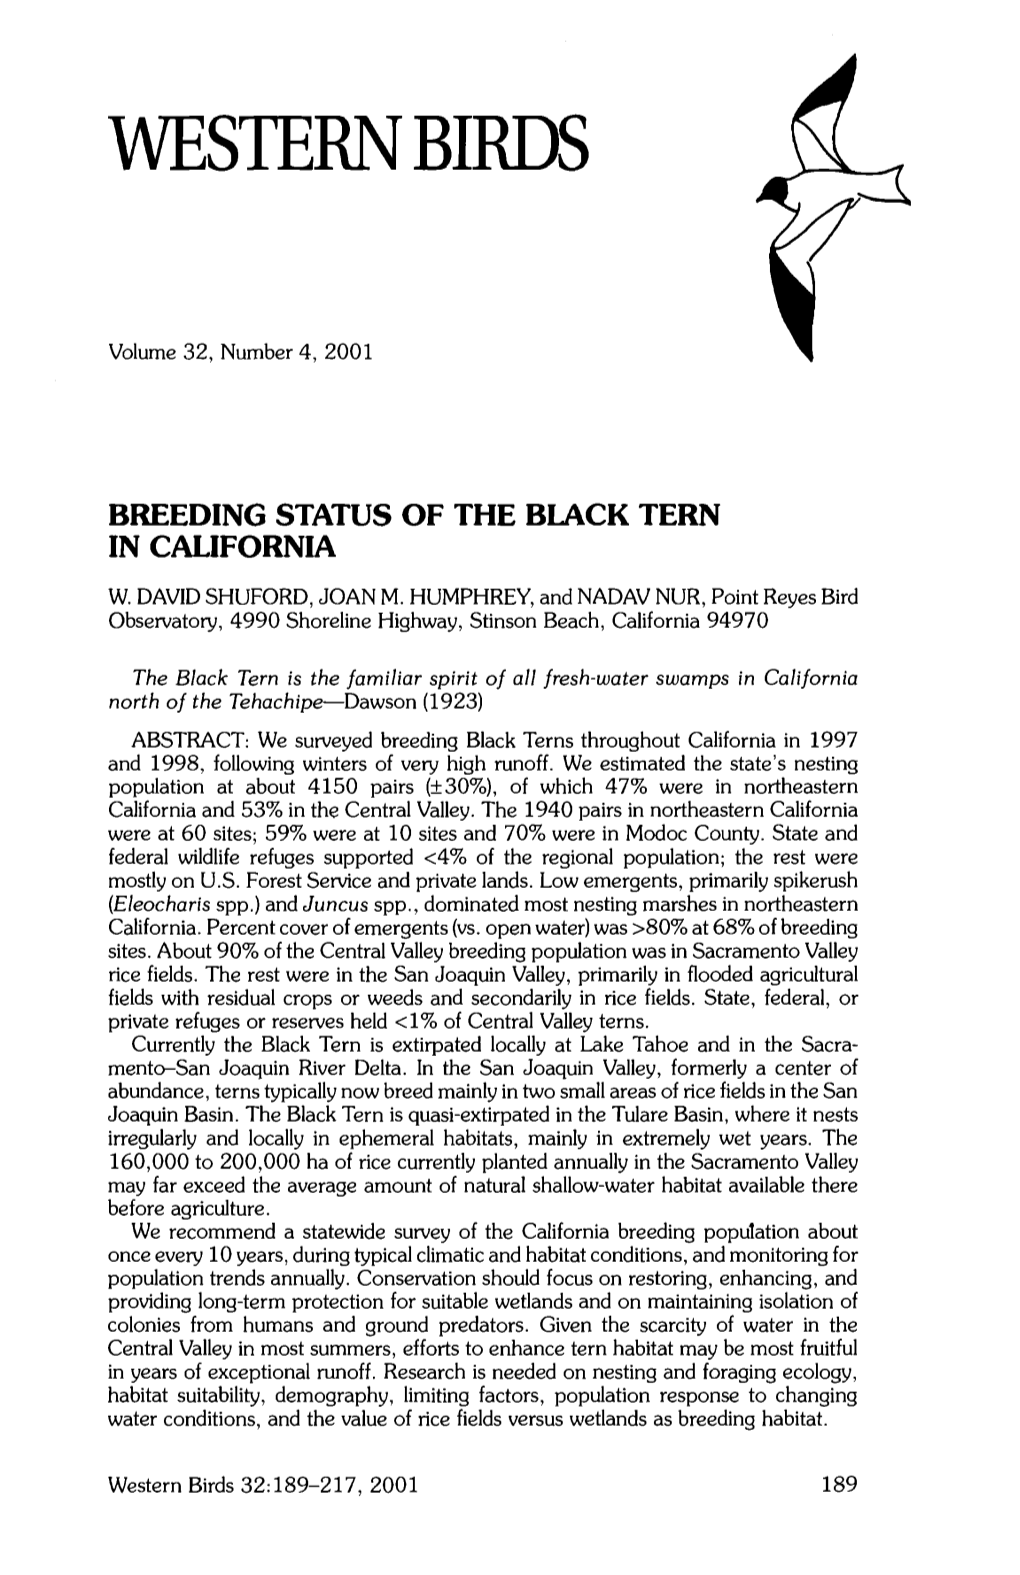 Breeding Status of the Black Tern in California